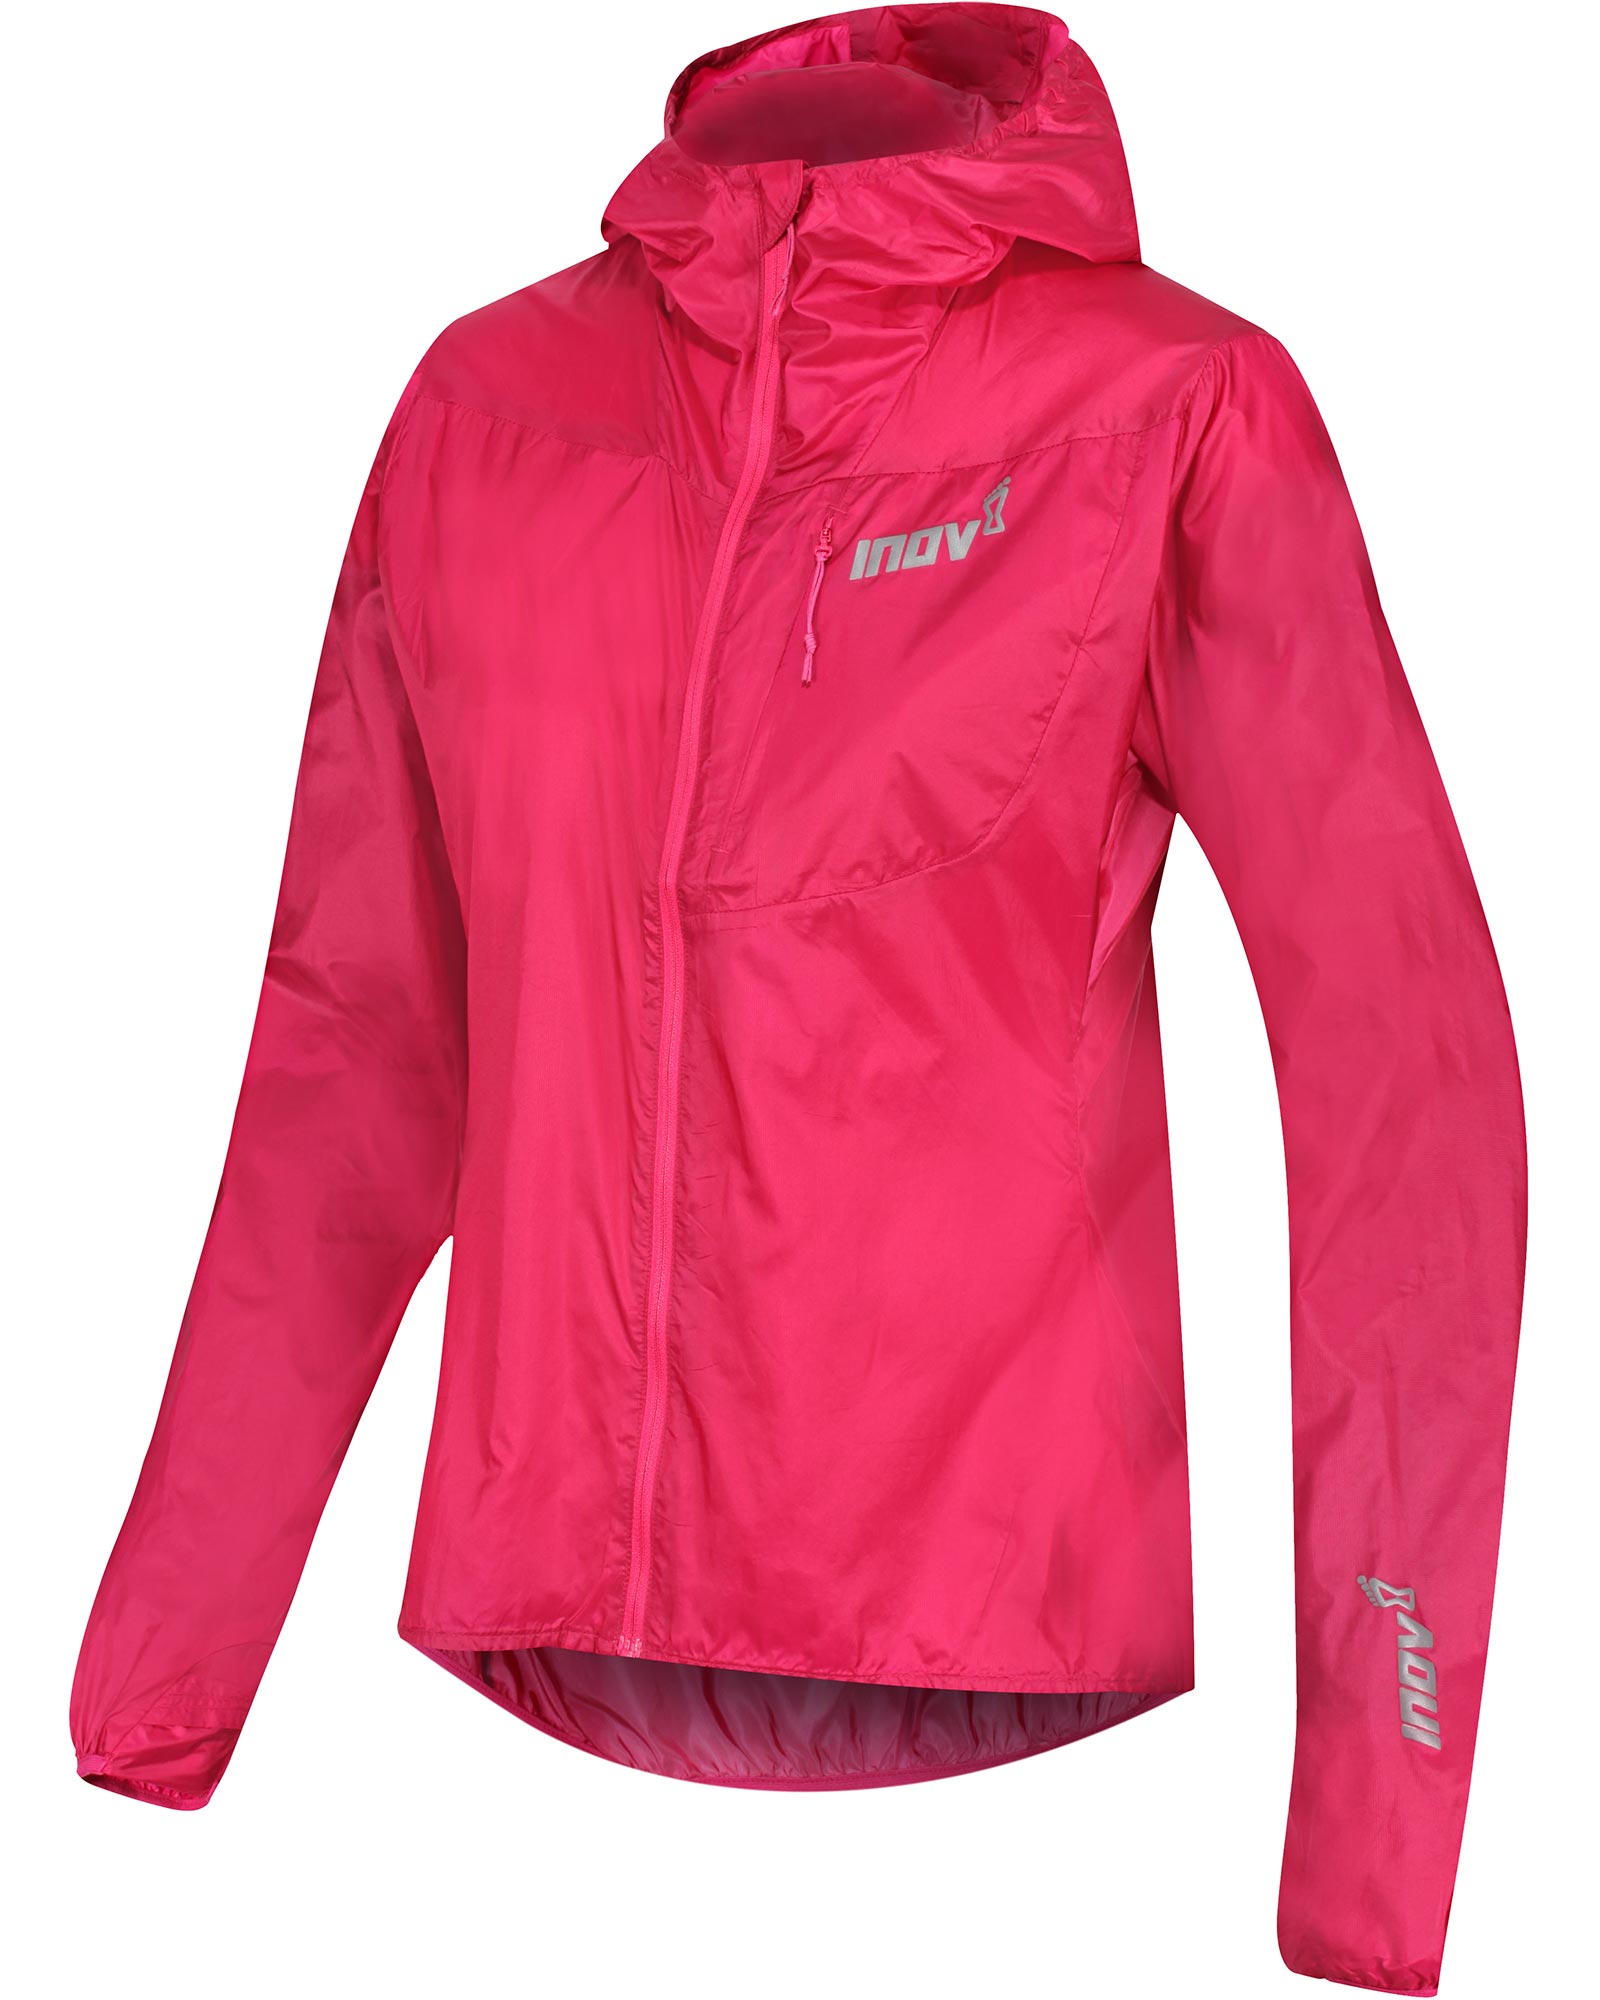 Inov 8 Full Zip Windshell Women’s Jacket - Pink 14